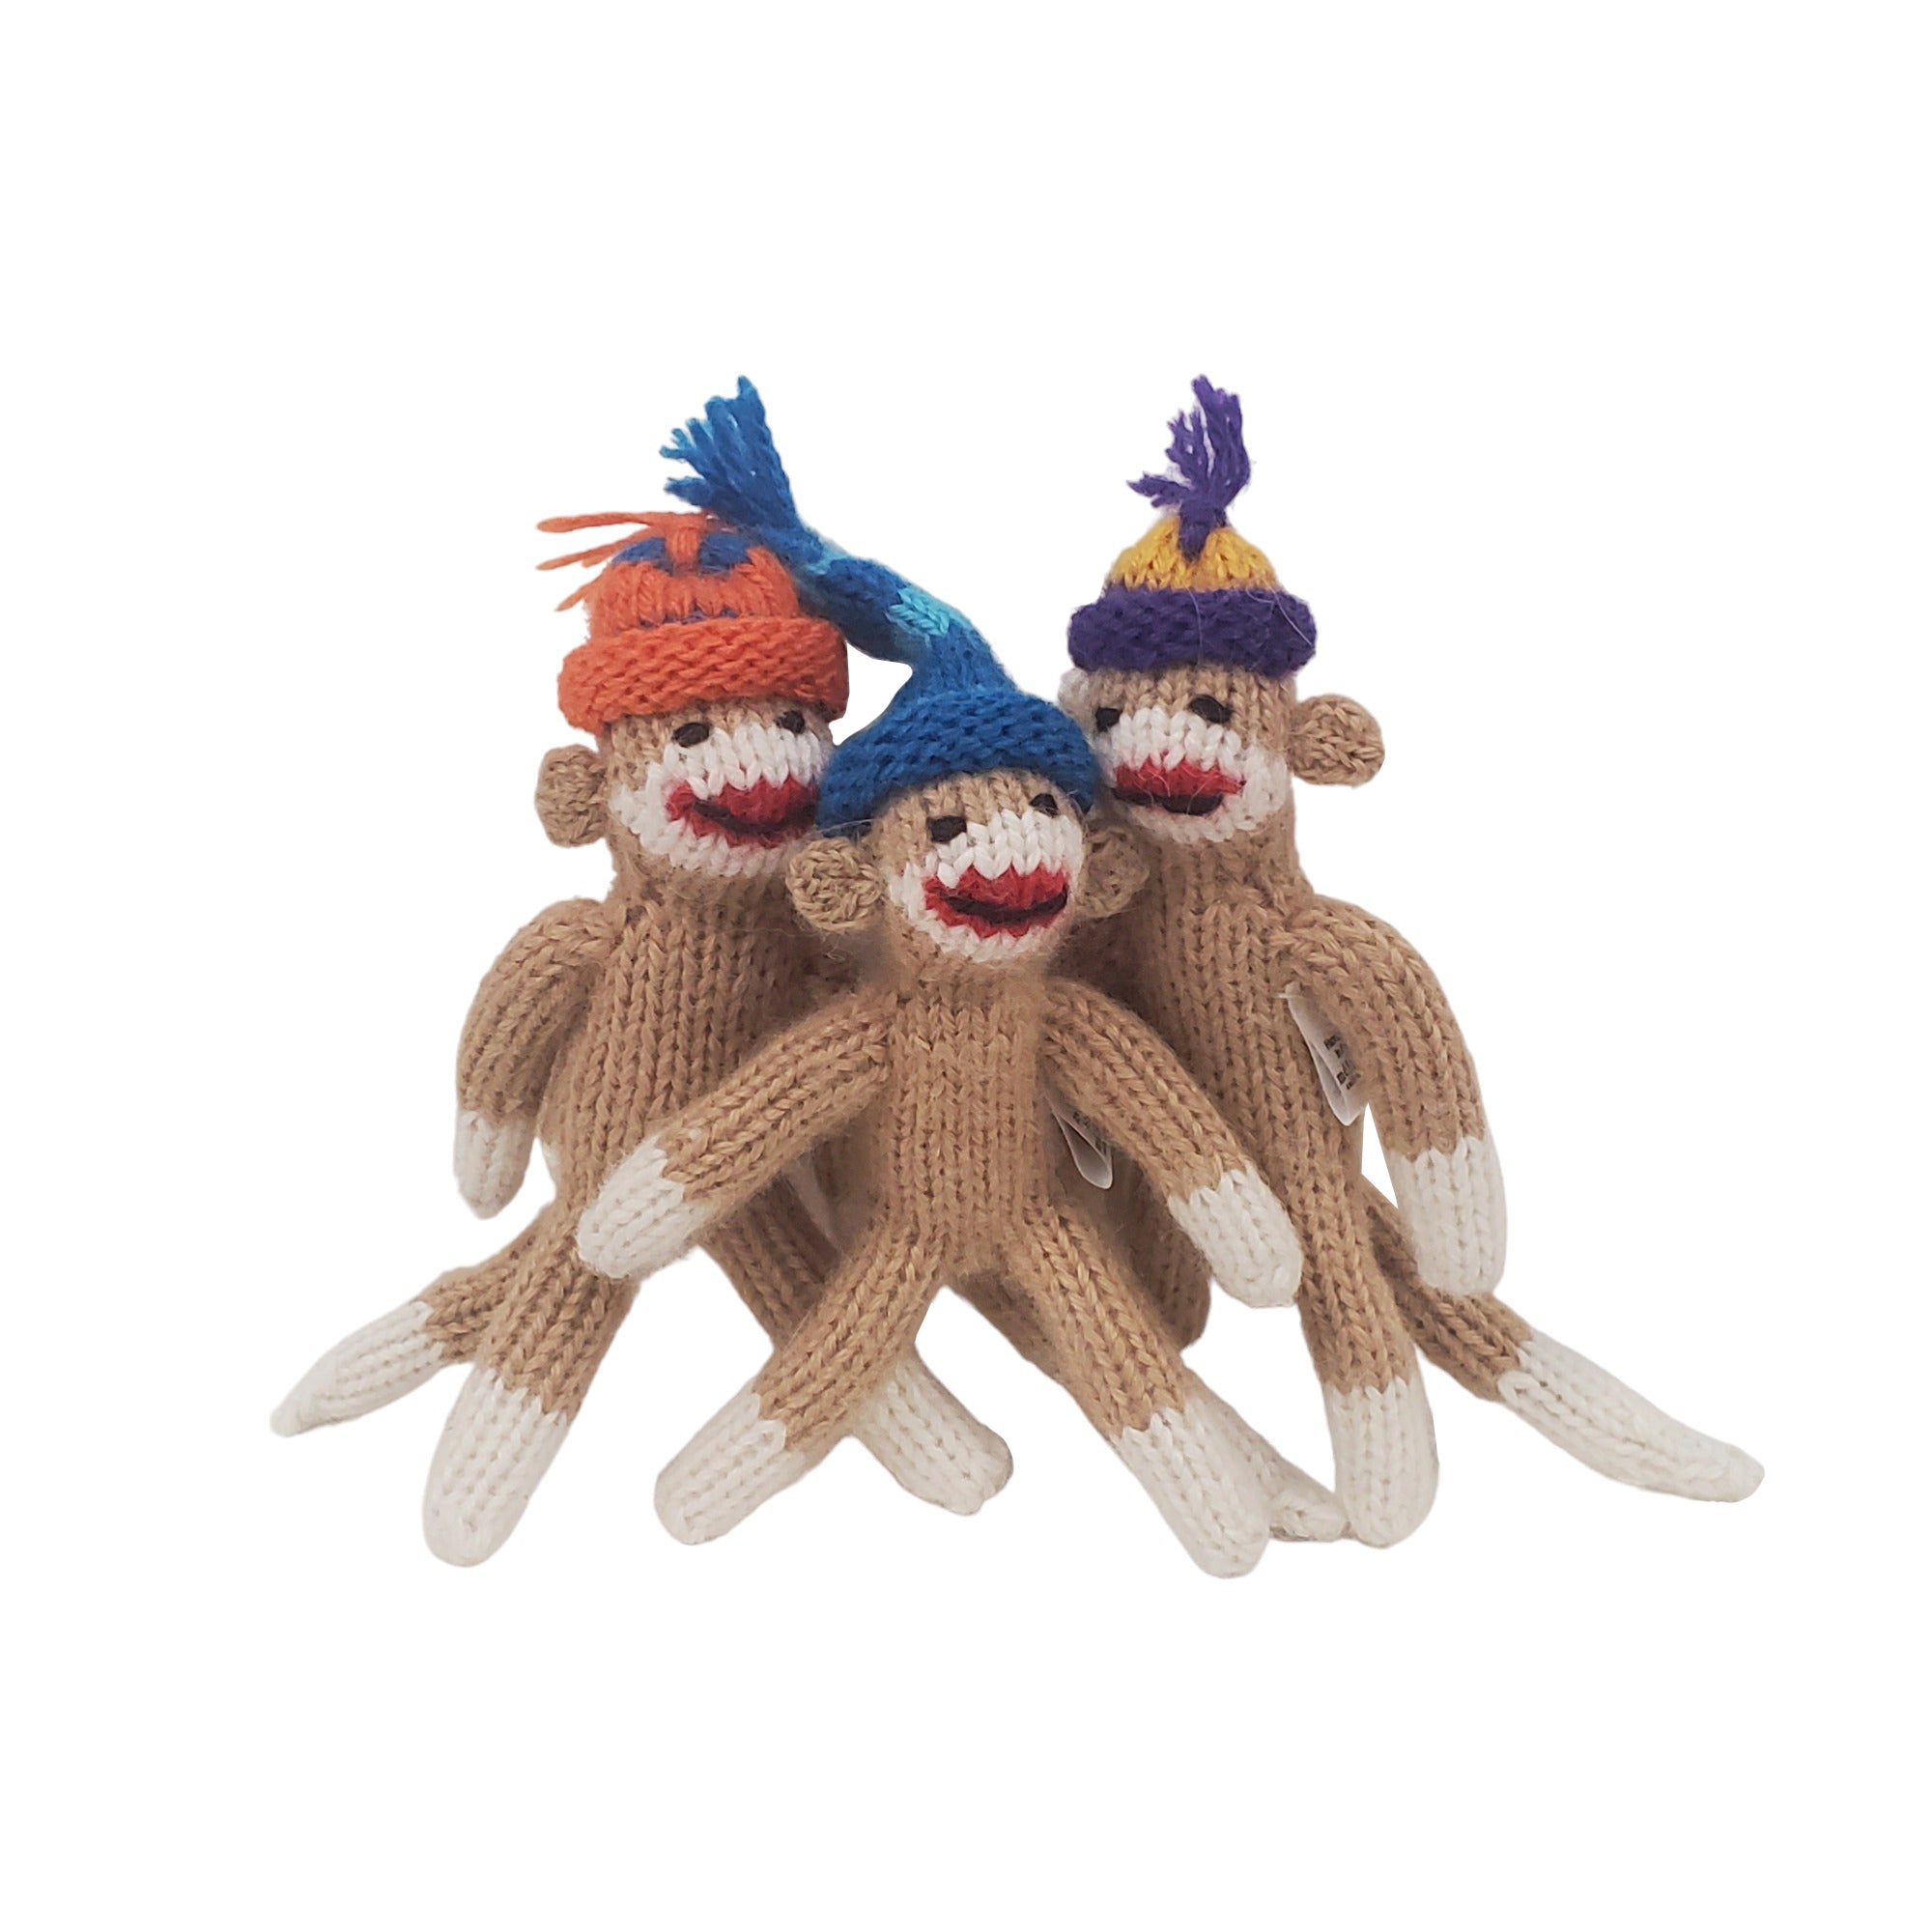 Sock Monkey Ornament - set of 3